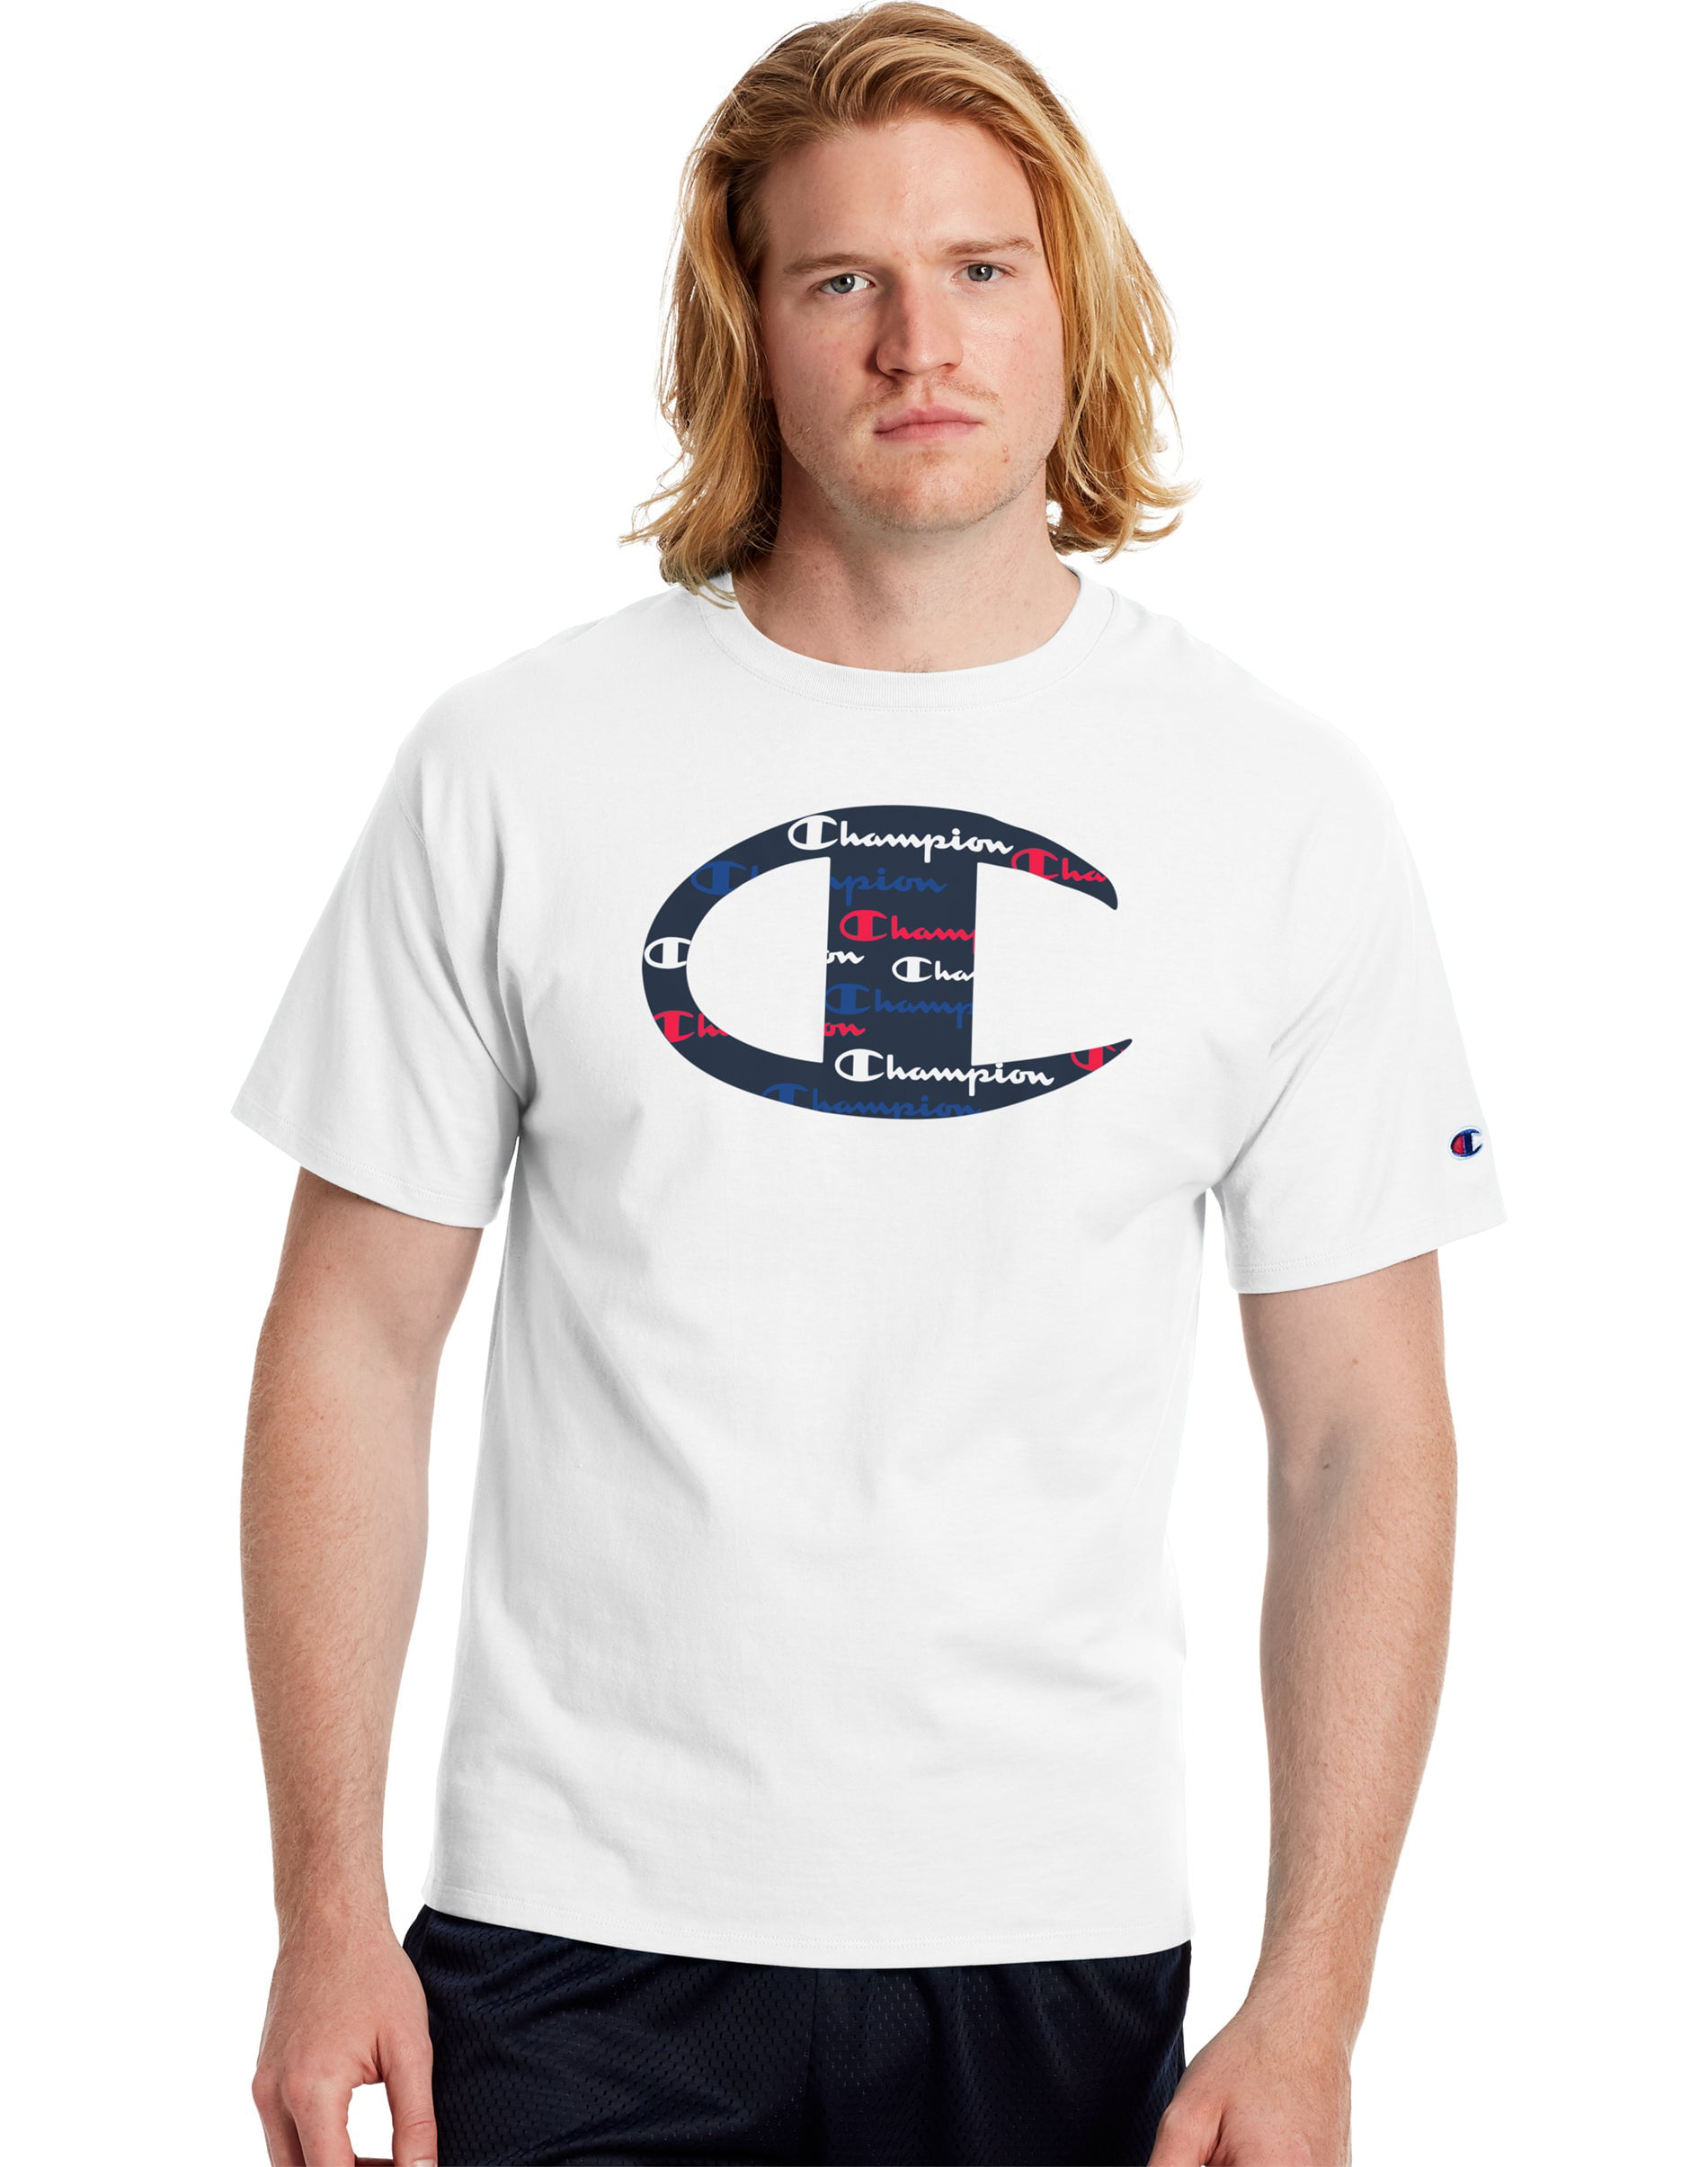 USA Champion Men's Classic T-Shirt